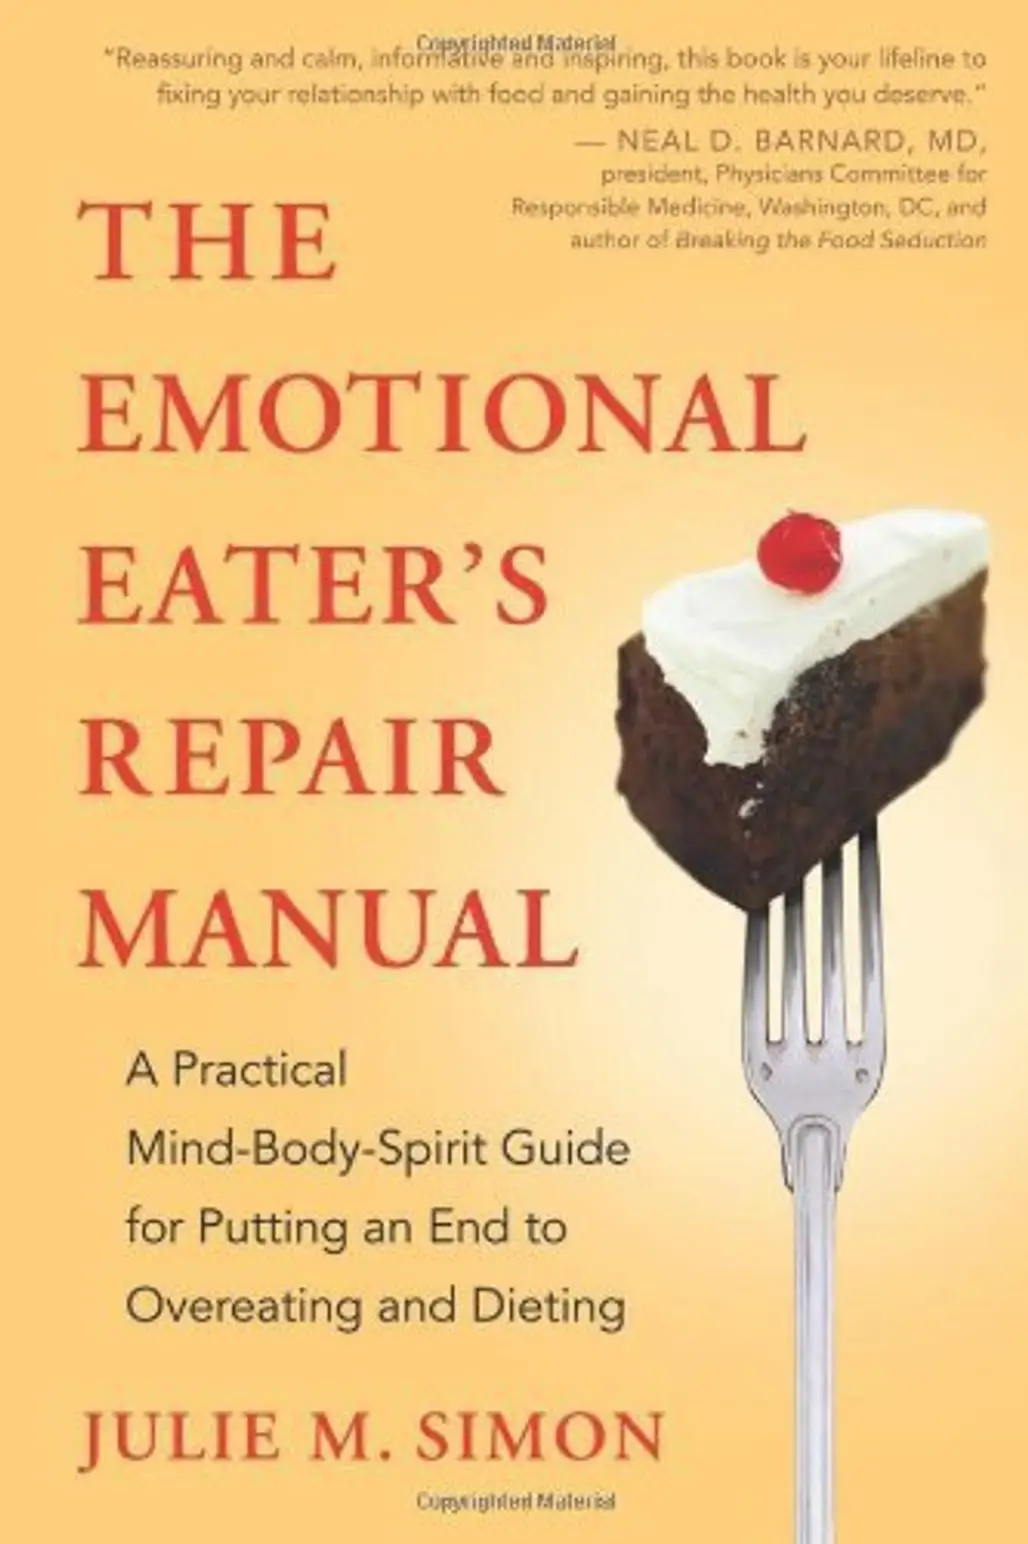 The Emotional Eater's Repair Manual by Julie M. Simon